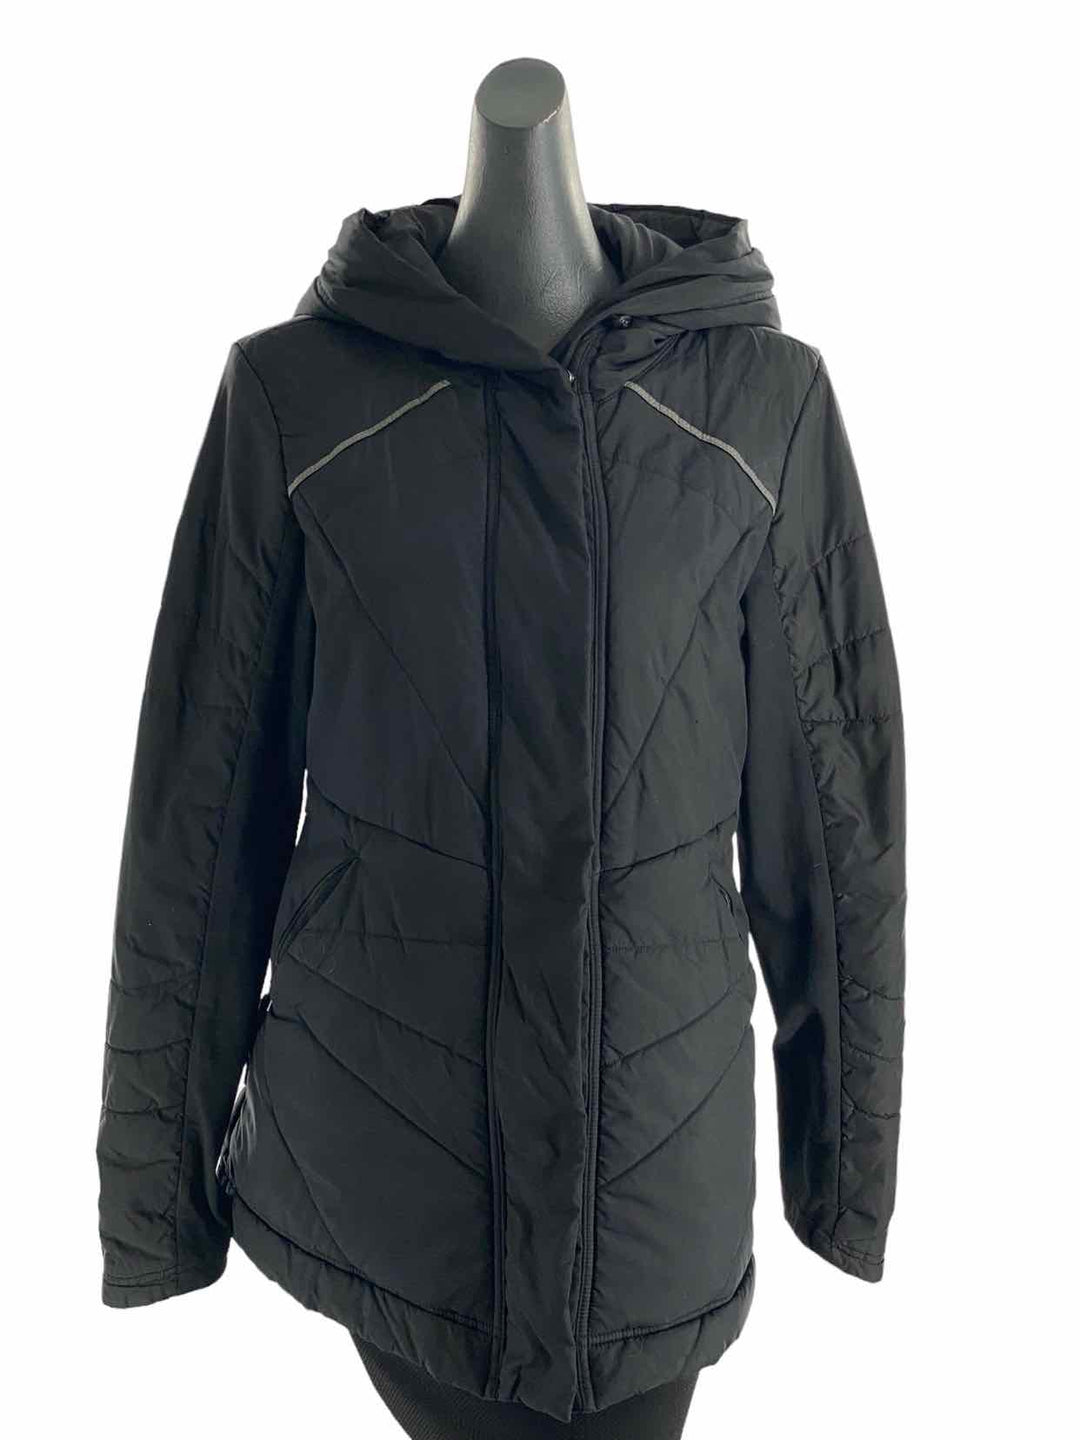 Zella Size M Black Jacket (Outdoor)